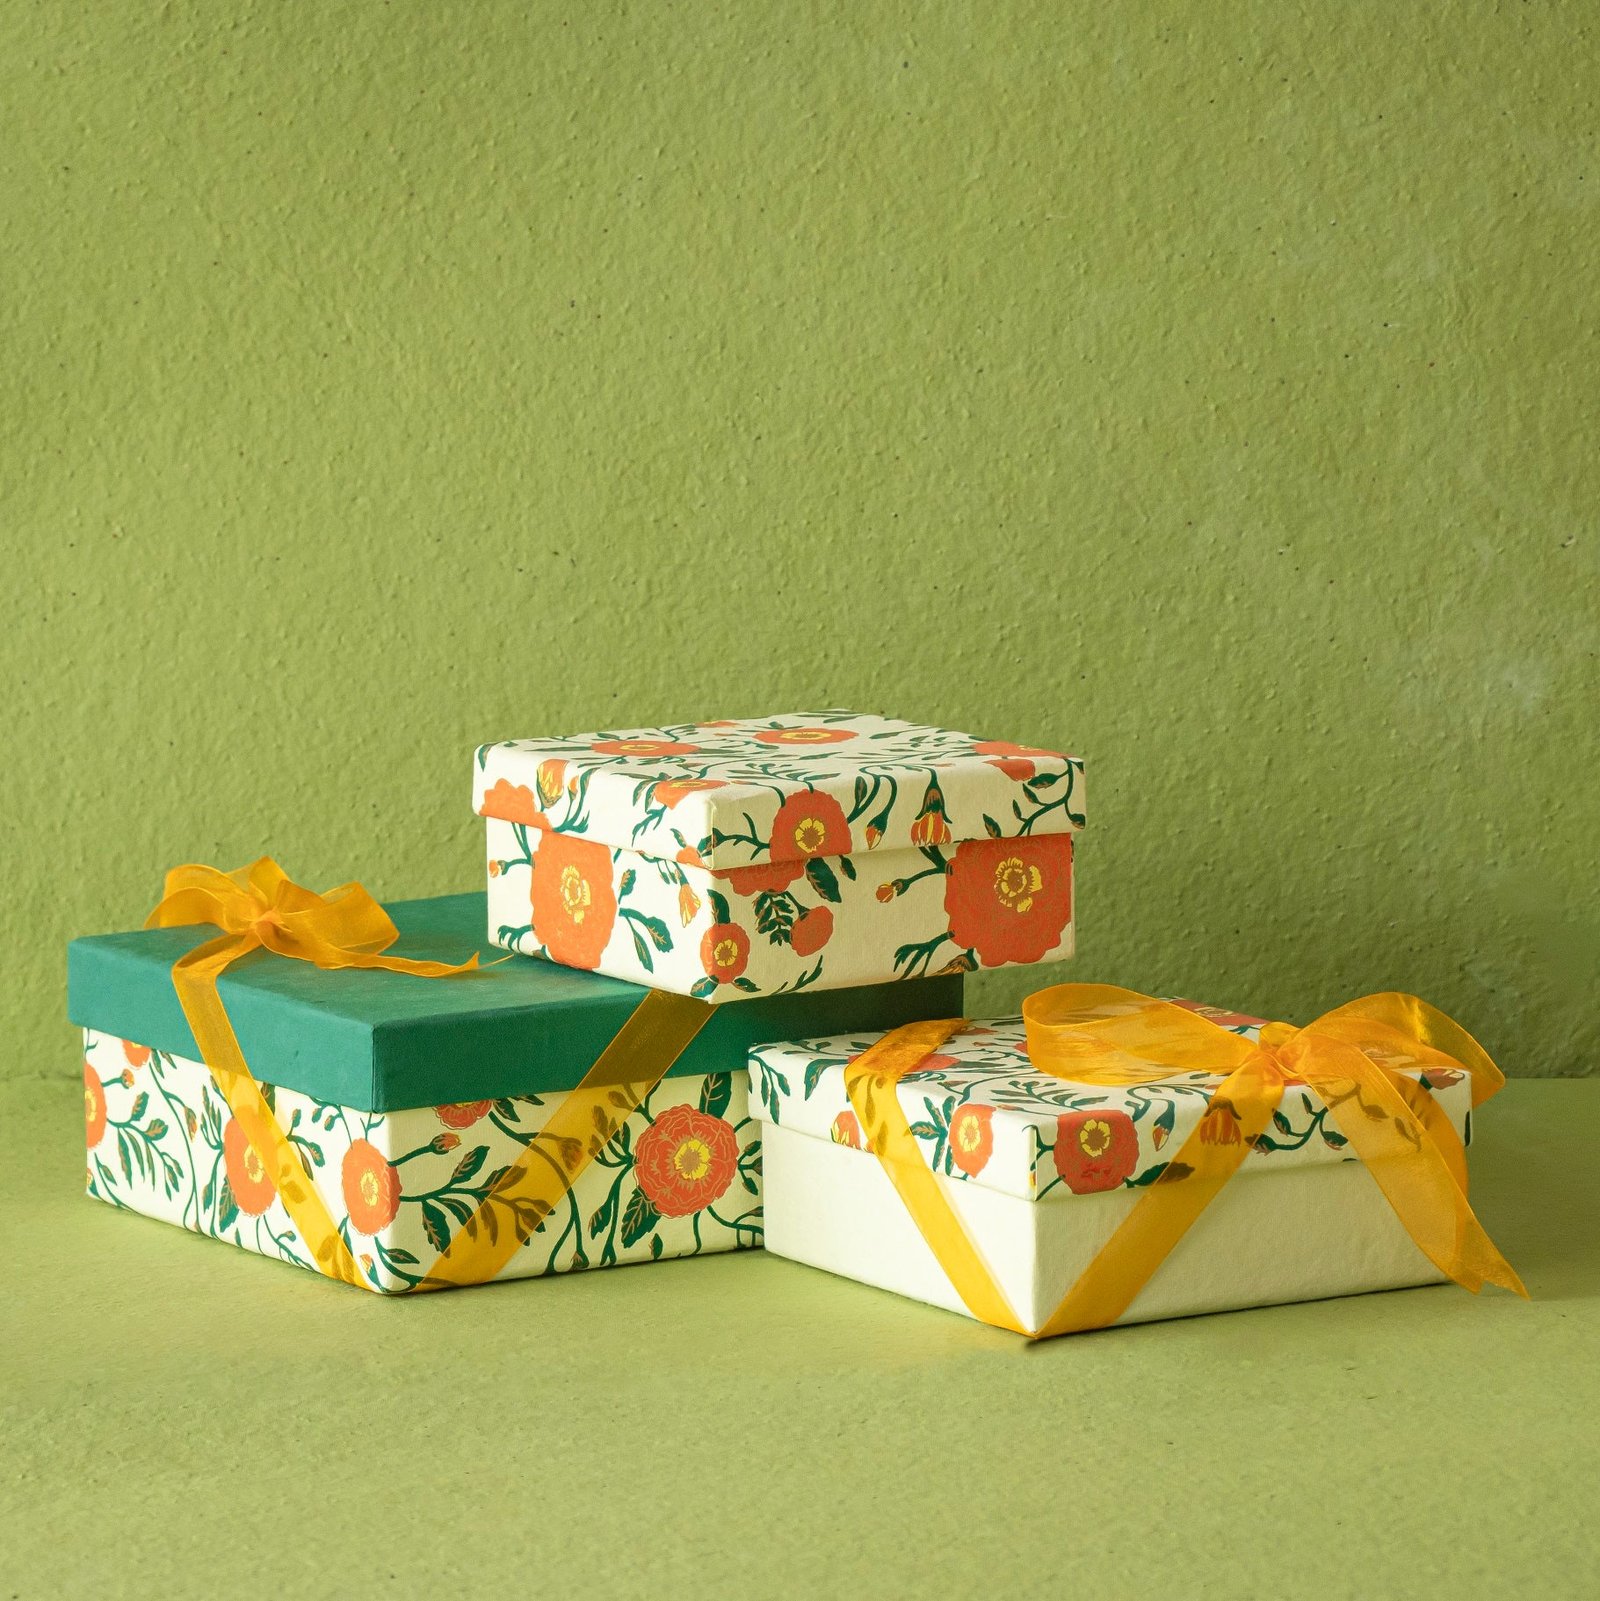 Diwali Gift Box – For Earth's Sake